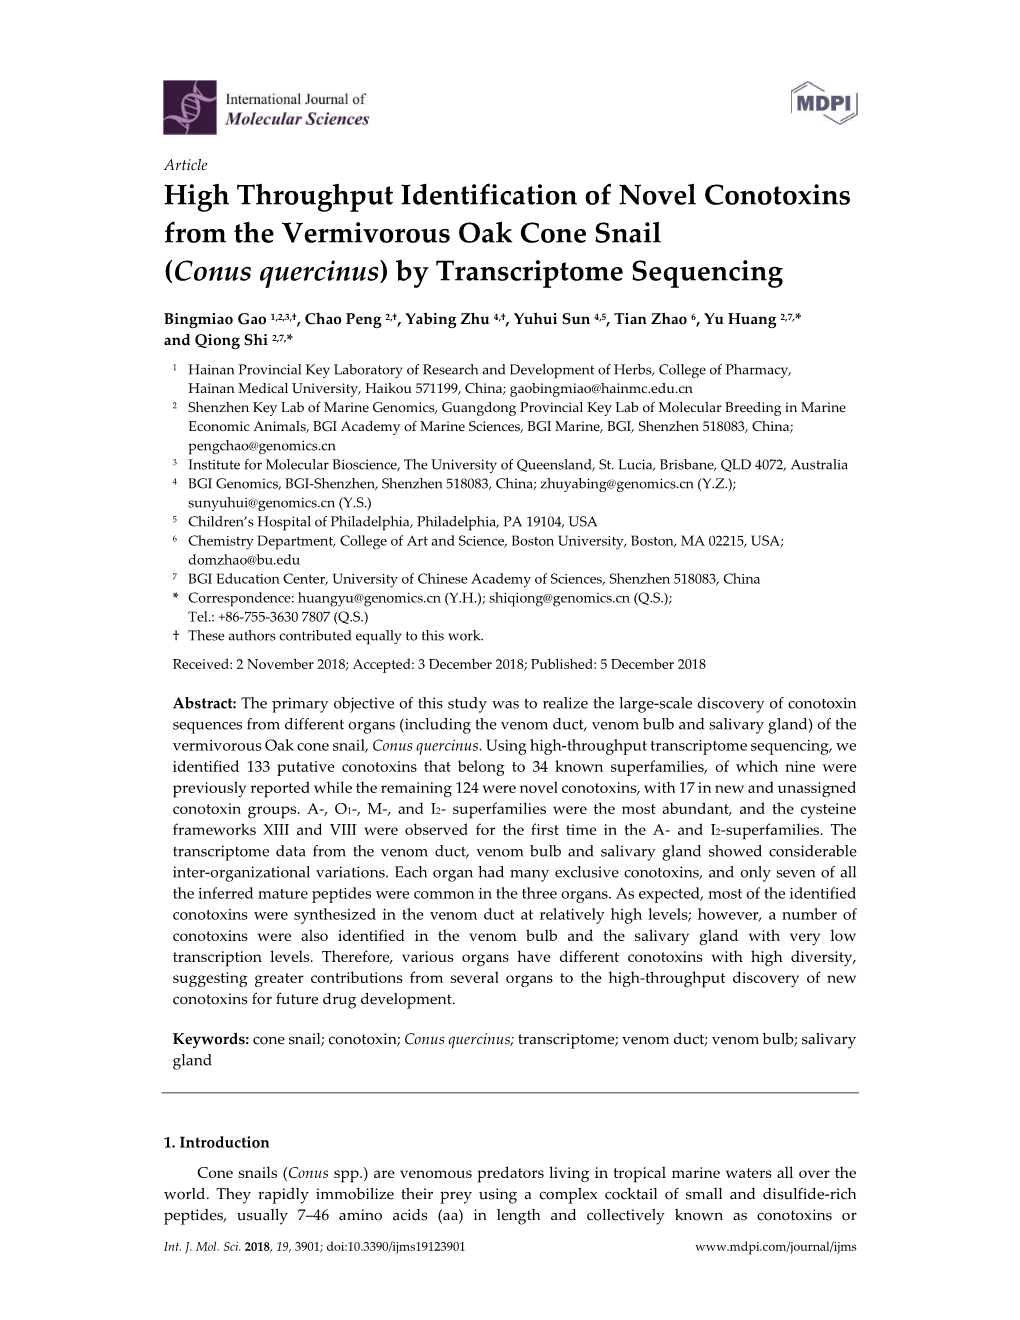 High Throughput Identification of Novel Conotoxins from the Vermivorous Oak Cone Snail (Conus Quercinus) by Transcriptome Sequencing